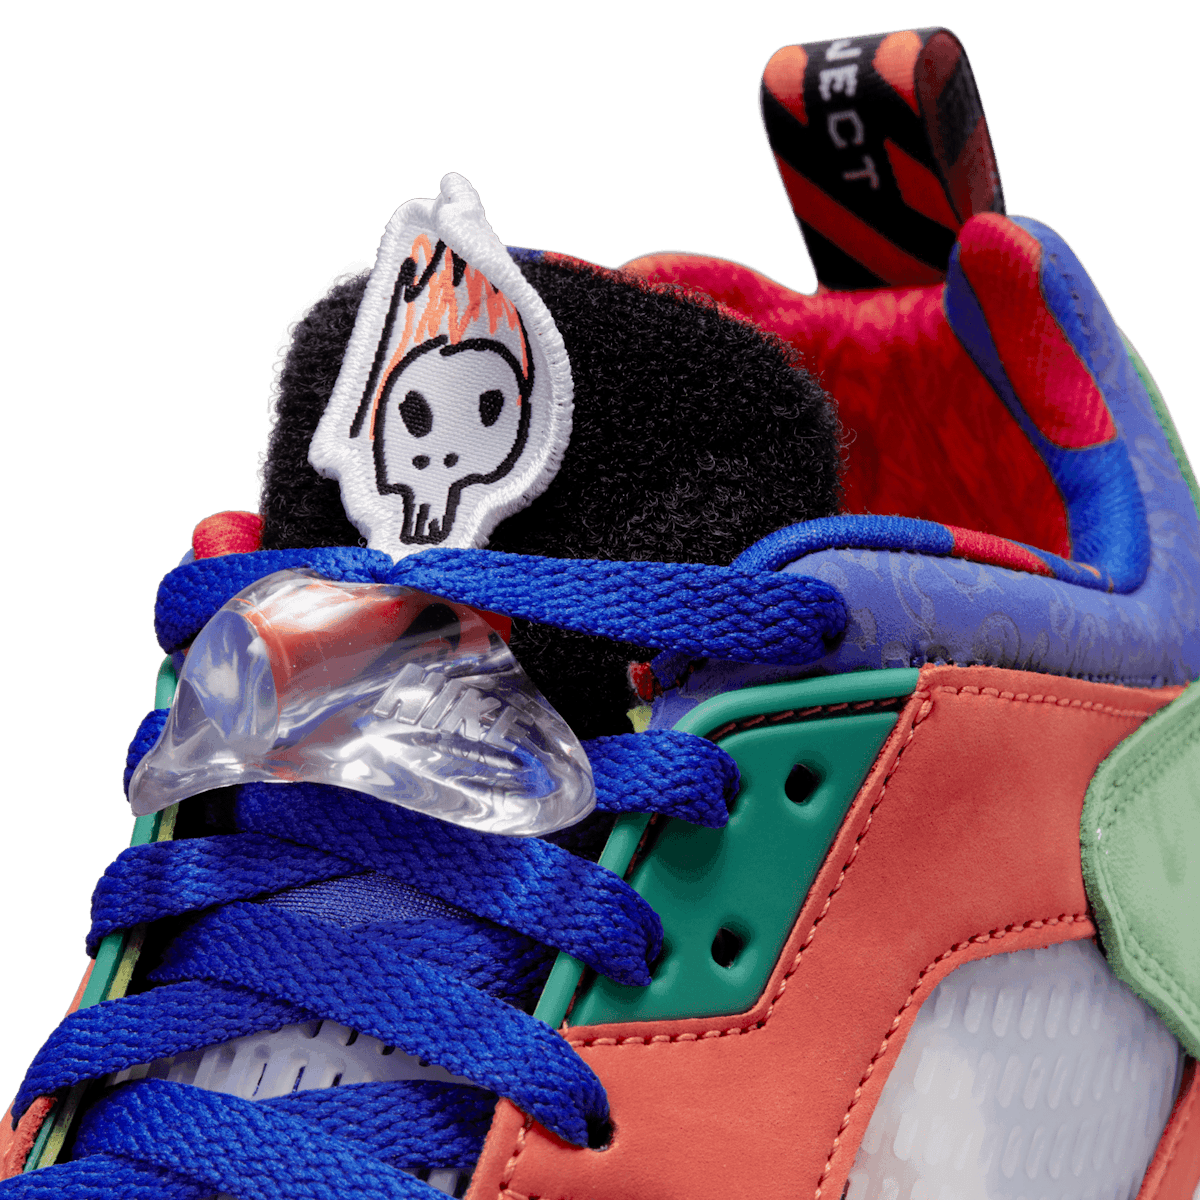 Air Jordan 5 Retro Low Doernbecher Mens Lifestyle Shoes (Blue/Multi) Free  Shipping